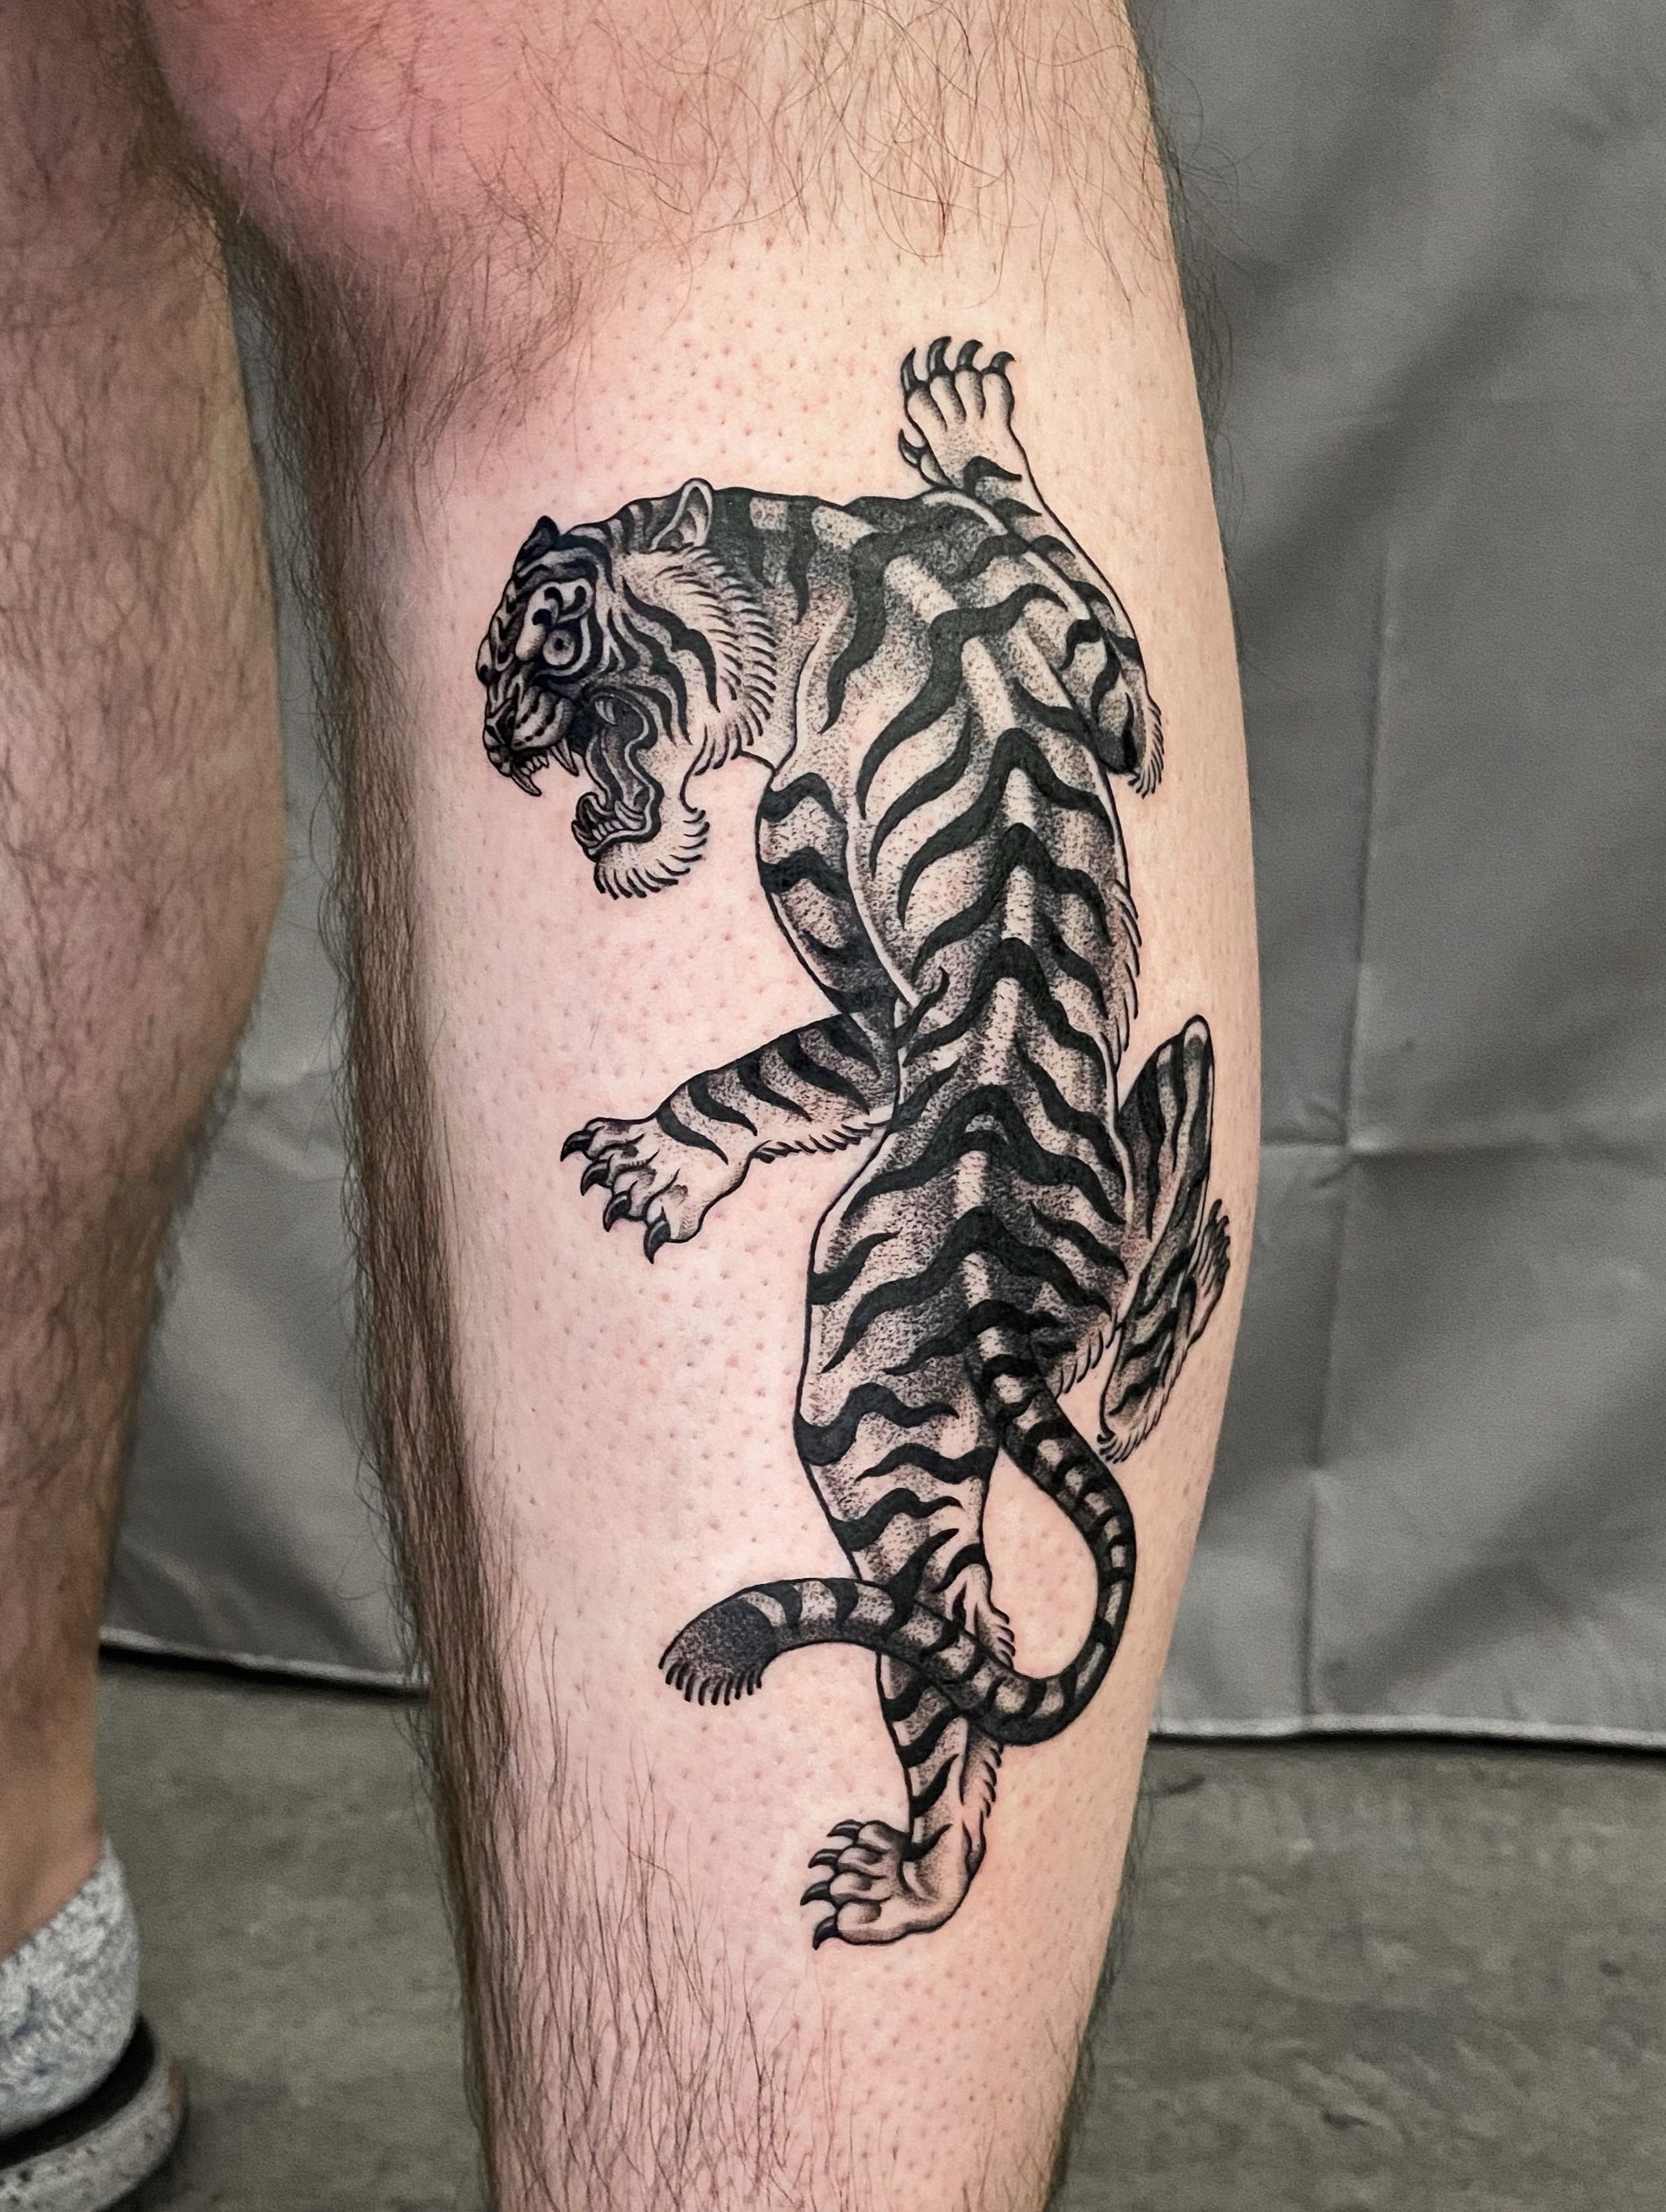 Tattoo uploaded by illson  Tiger on calf  Tattoodo